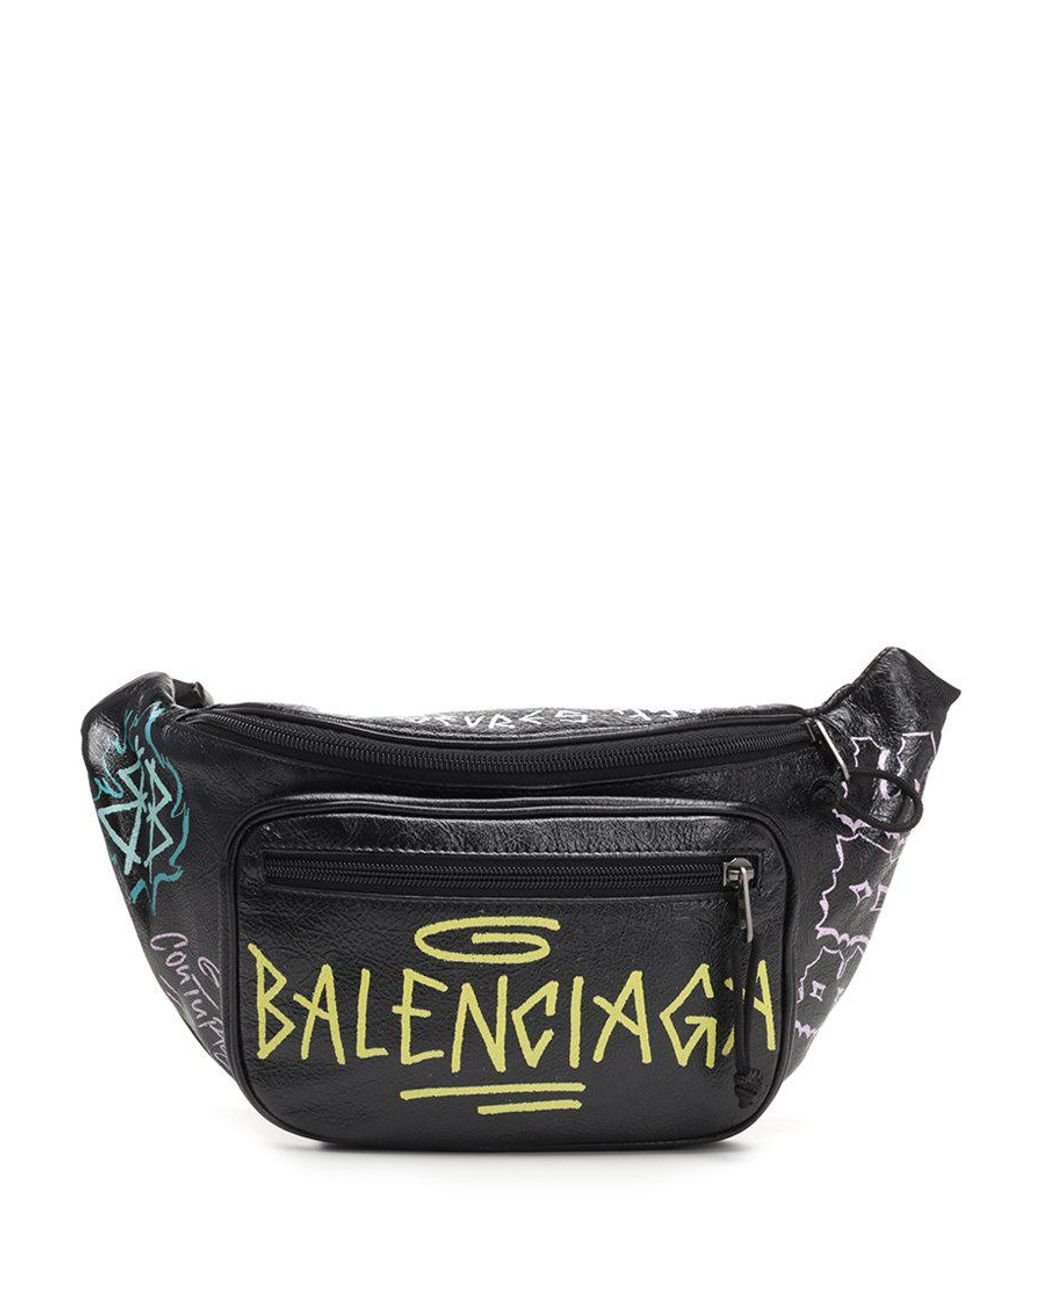 Balenciaga Graffiti Belt Bag in Black for Men | Lyst